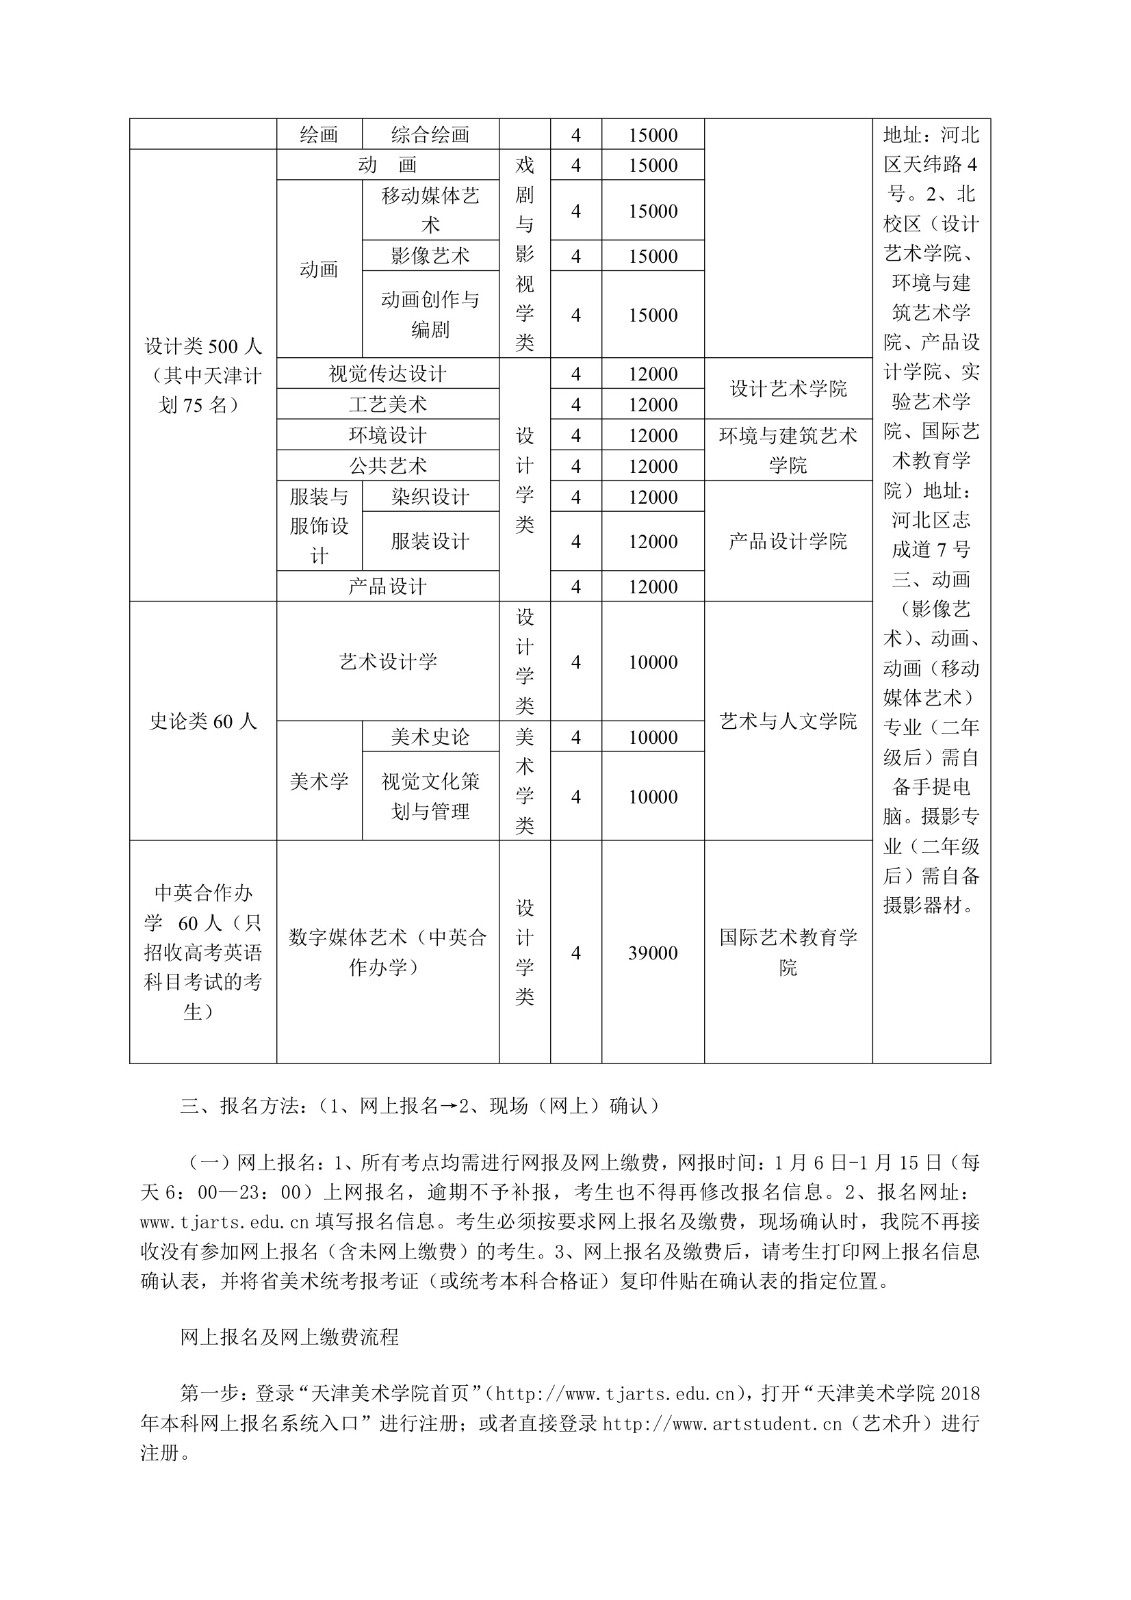 tianjinmeishu-page2 1:6:2018.jpeg